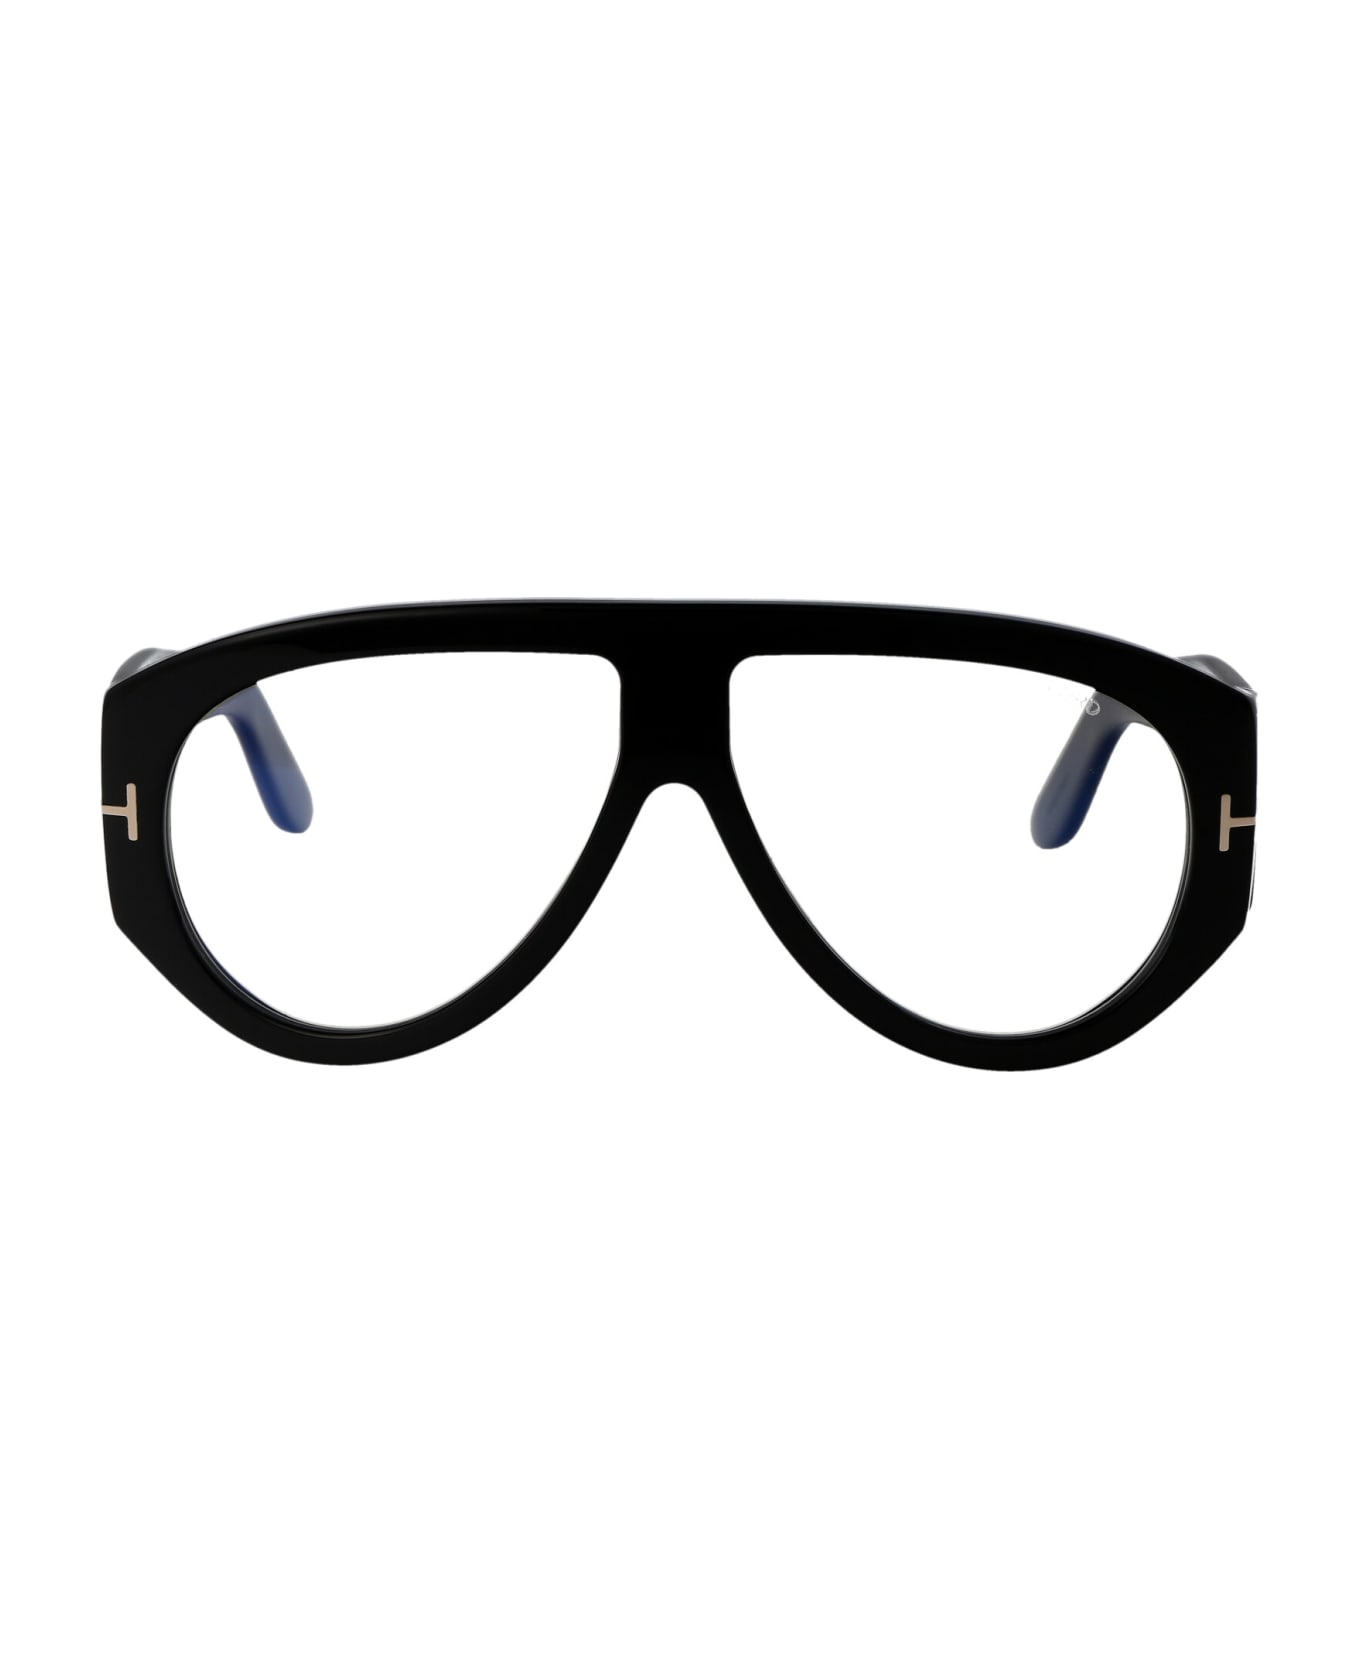 Tom Ford Eyewear Ft5958-b Glasses - 001 Nero Lucido アイウェア